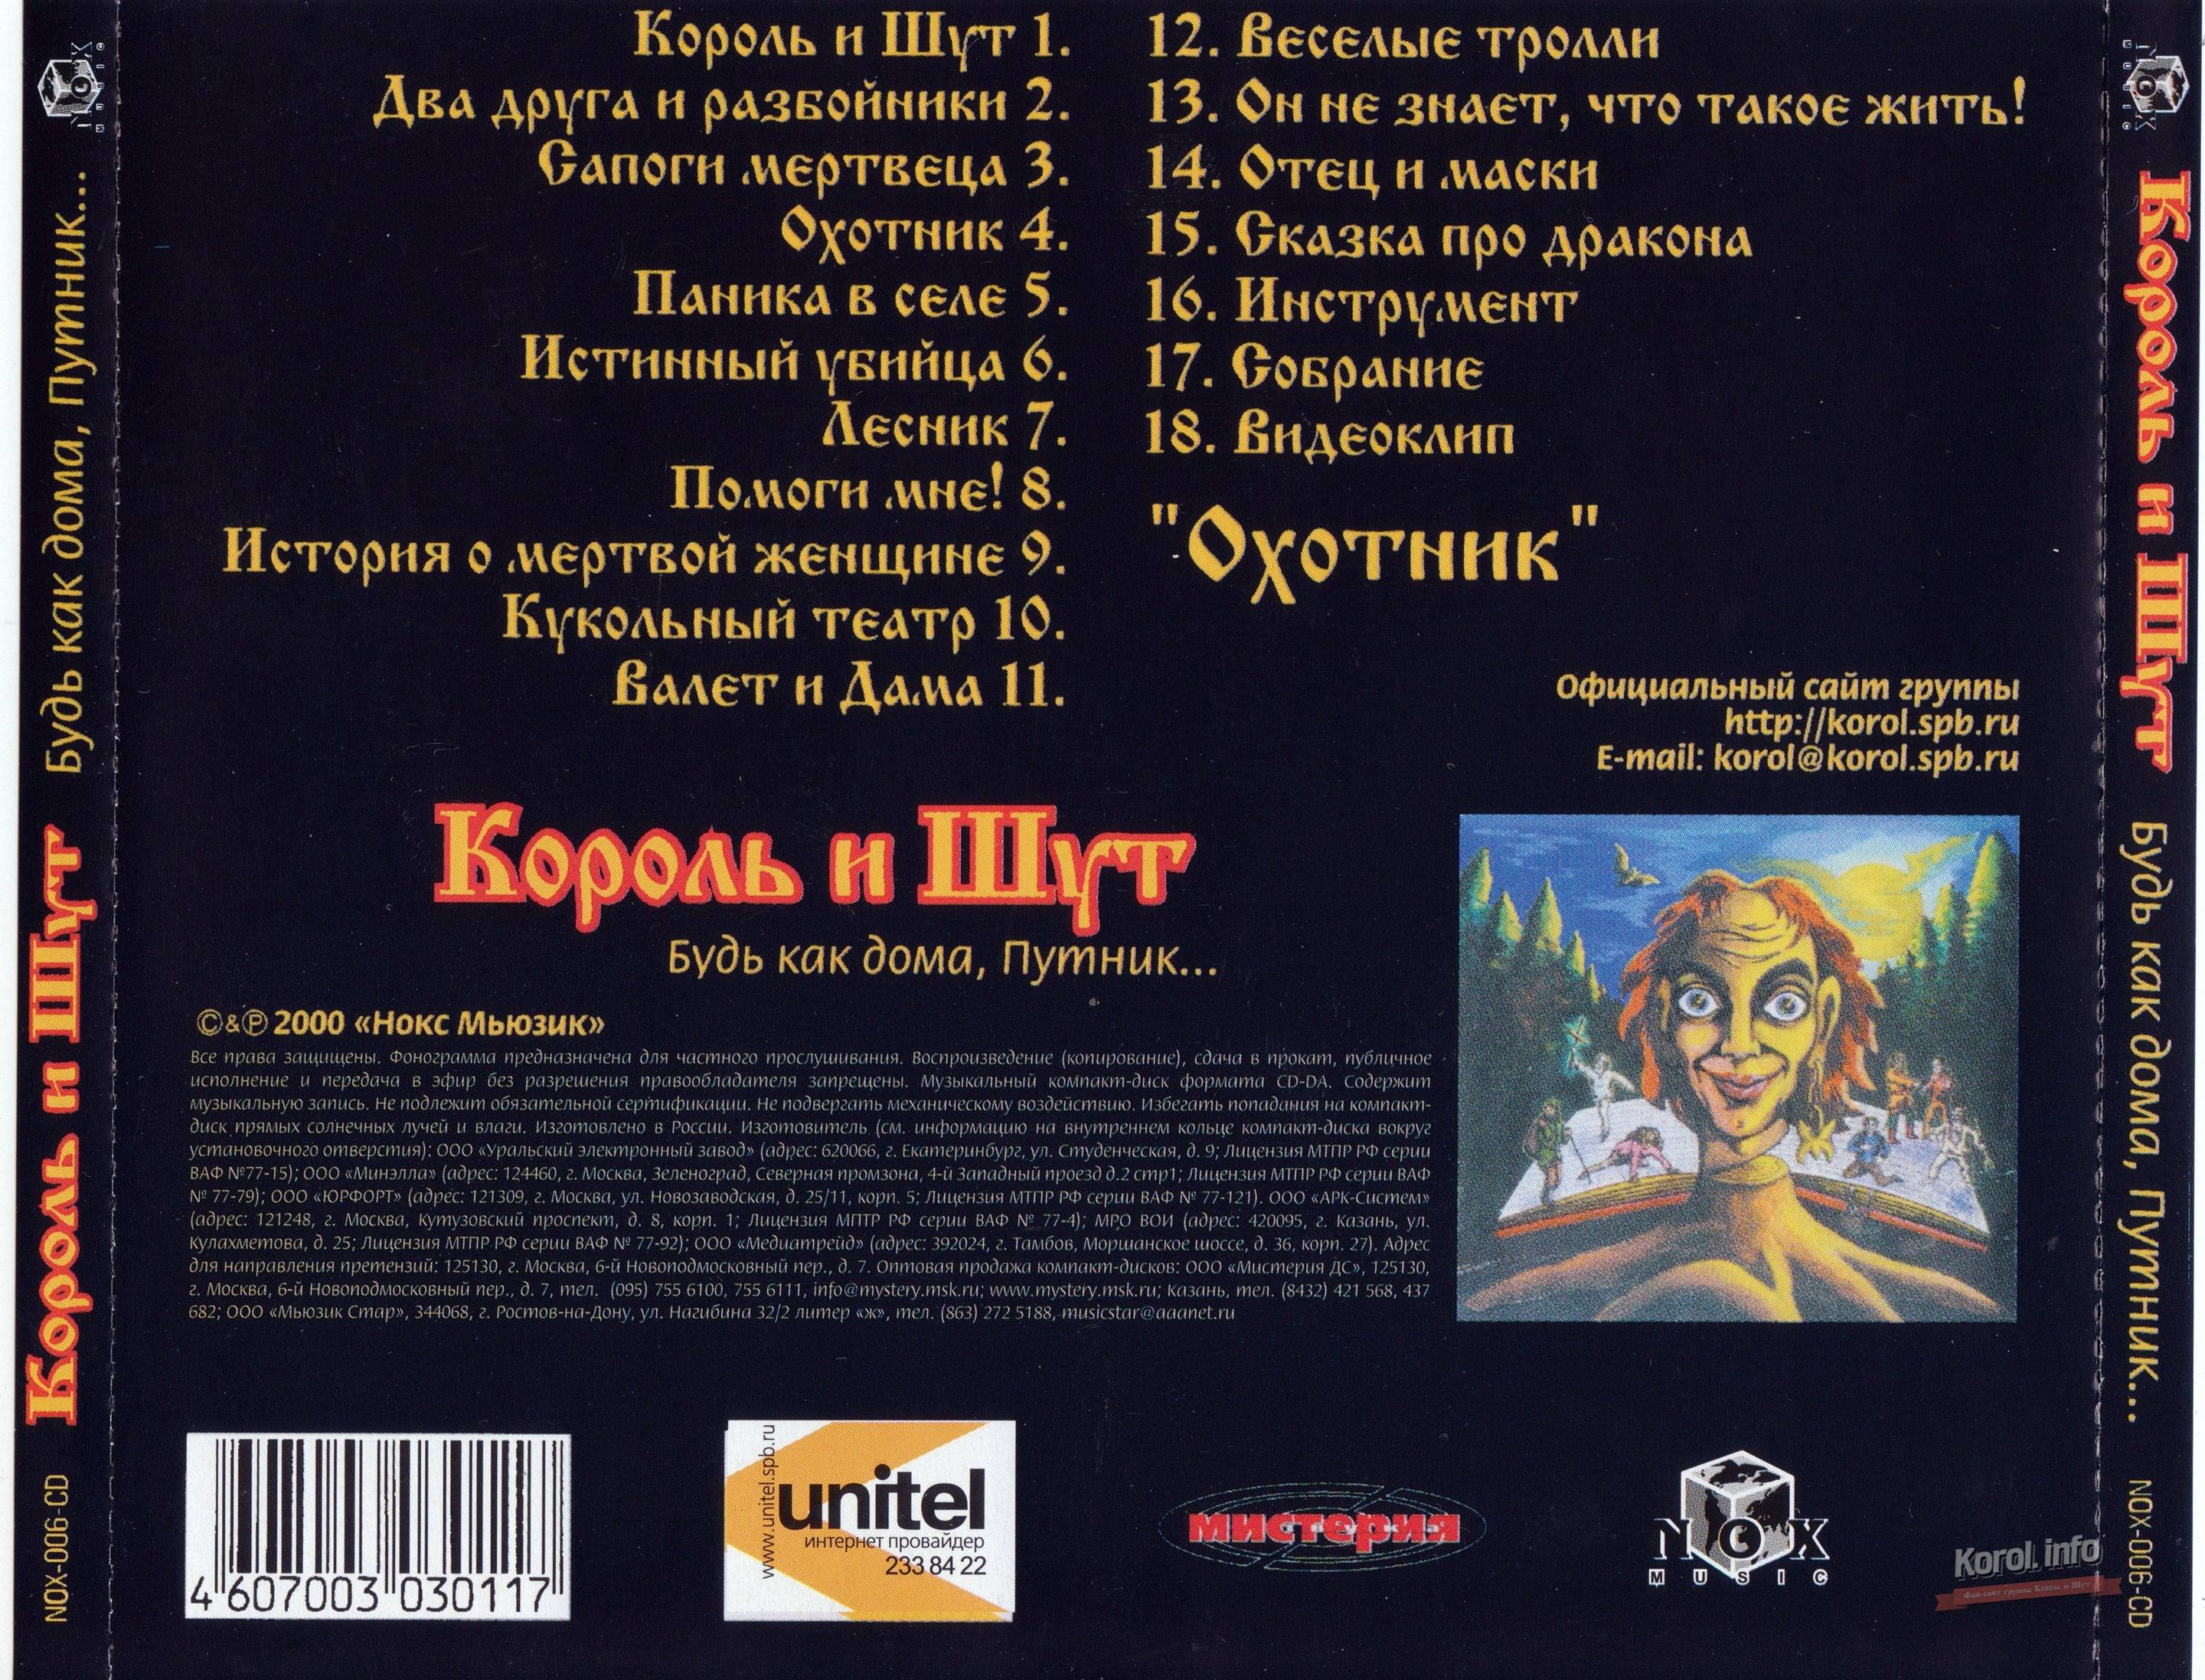 Обложка диска «Король и Шут»